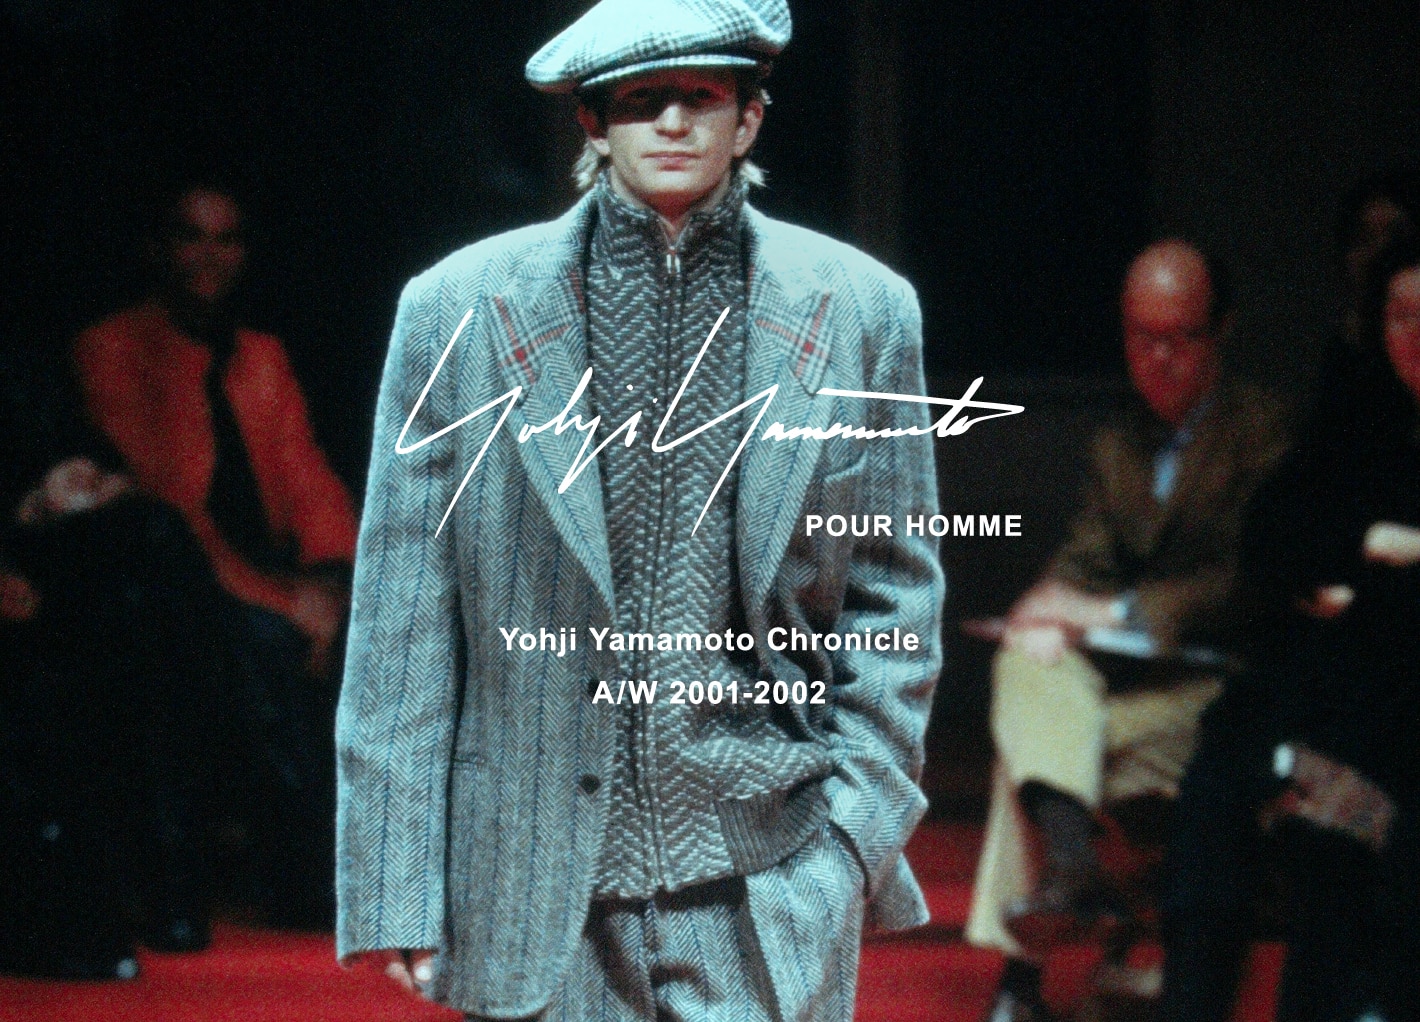 Yohji Yamamoto Chronicle – POUR HOMME A/W 2001-2002